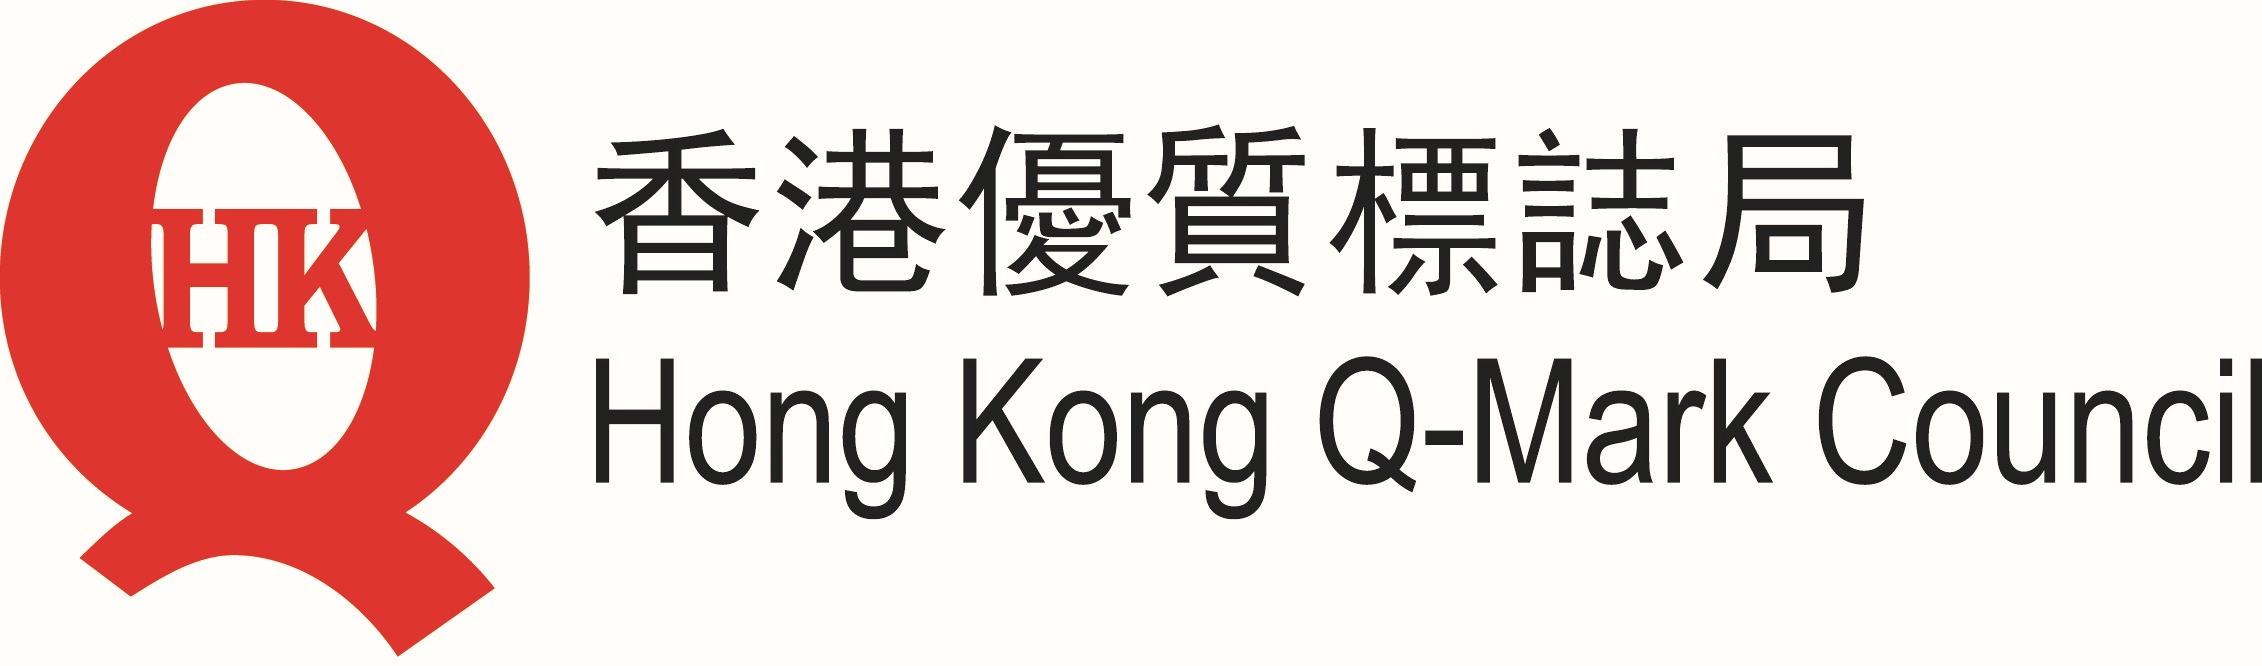 Q Mark logo